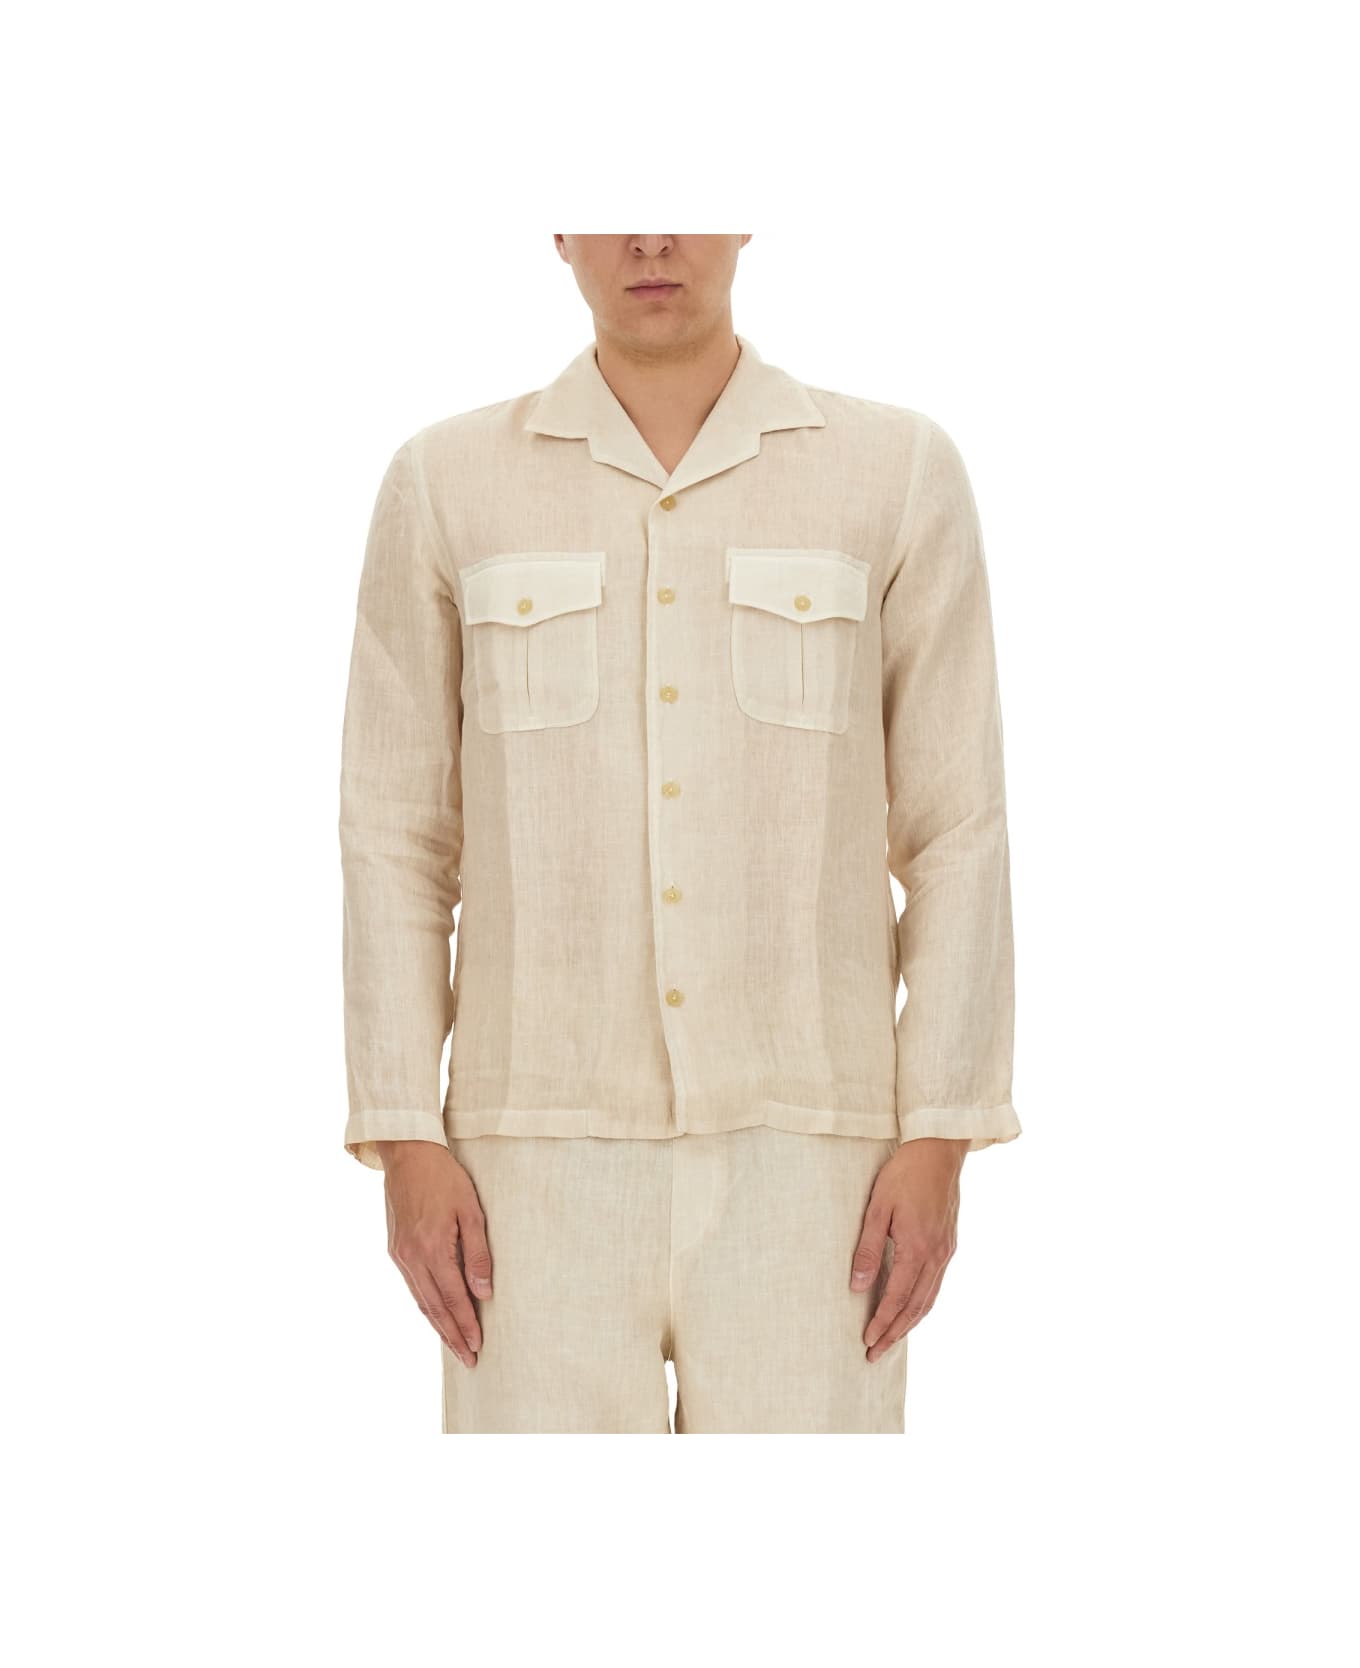 120% Lino Linen Shirt - Safari soft fade